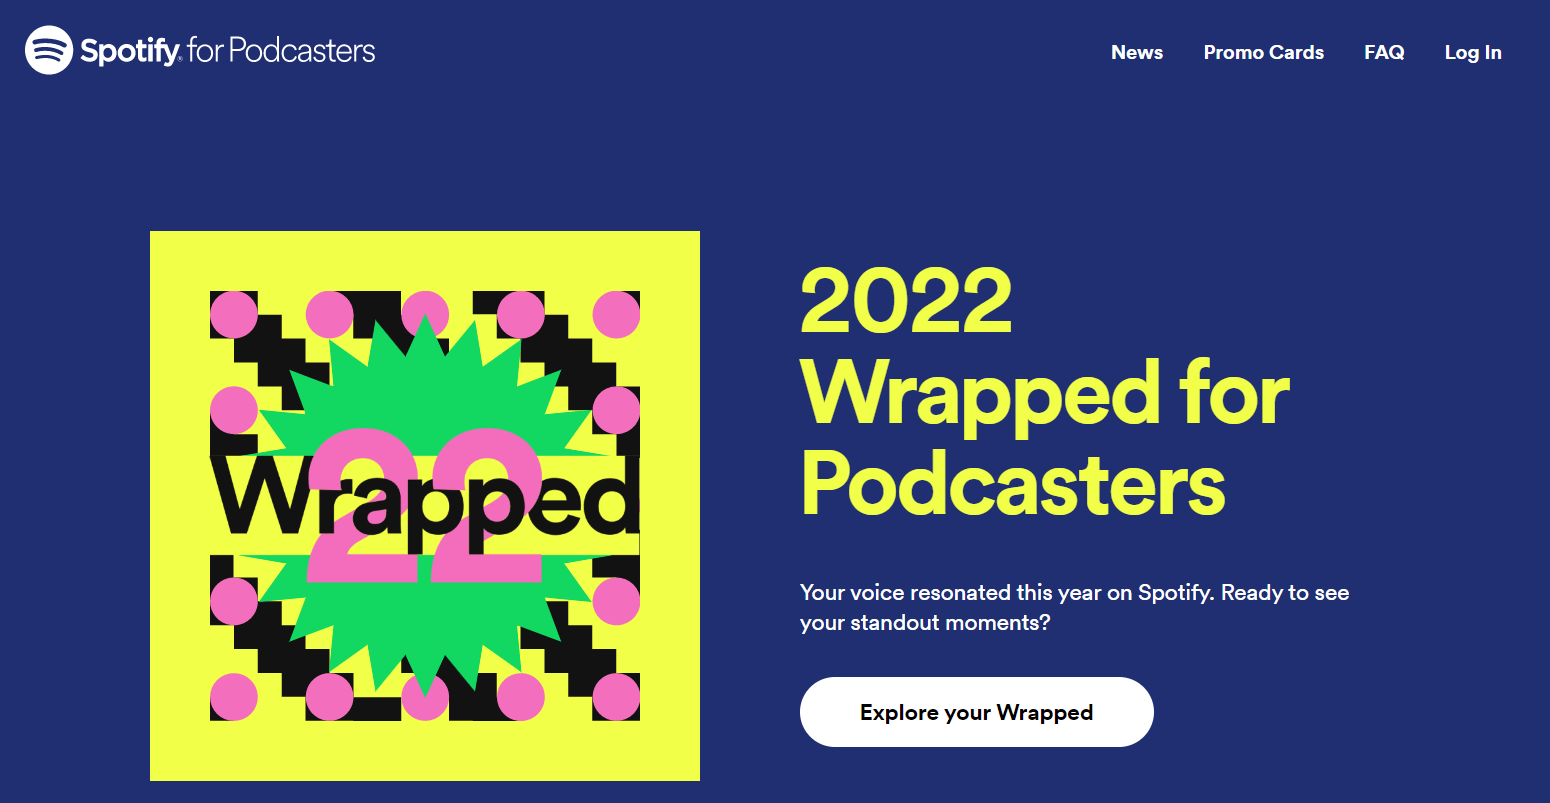 Visite o Spotify para Podcasters